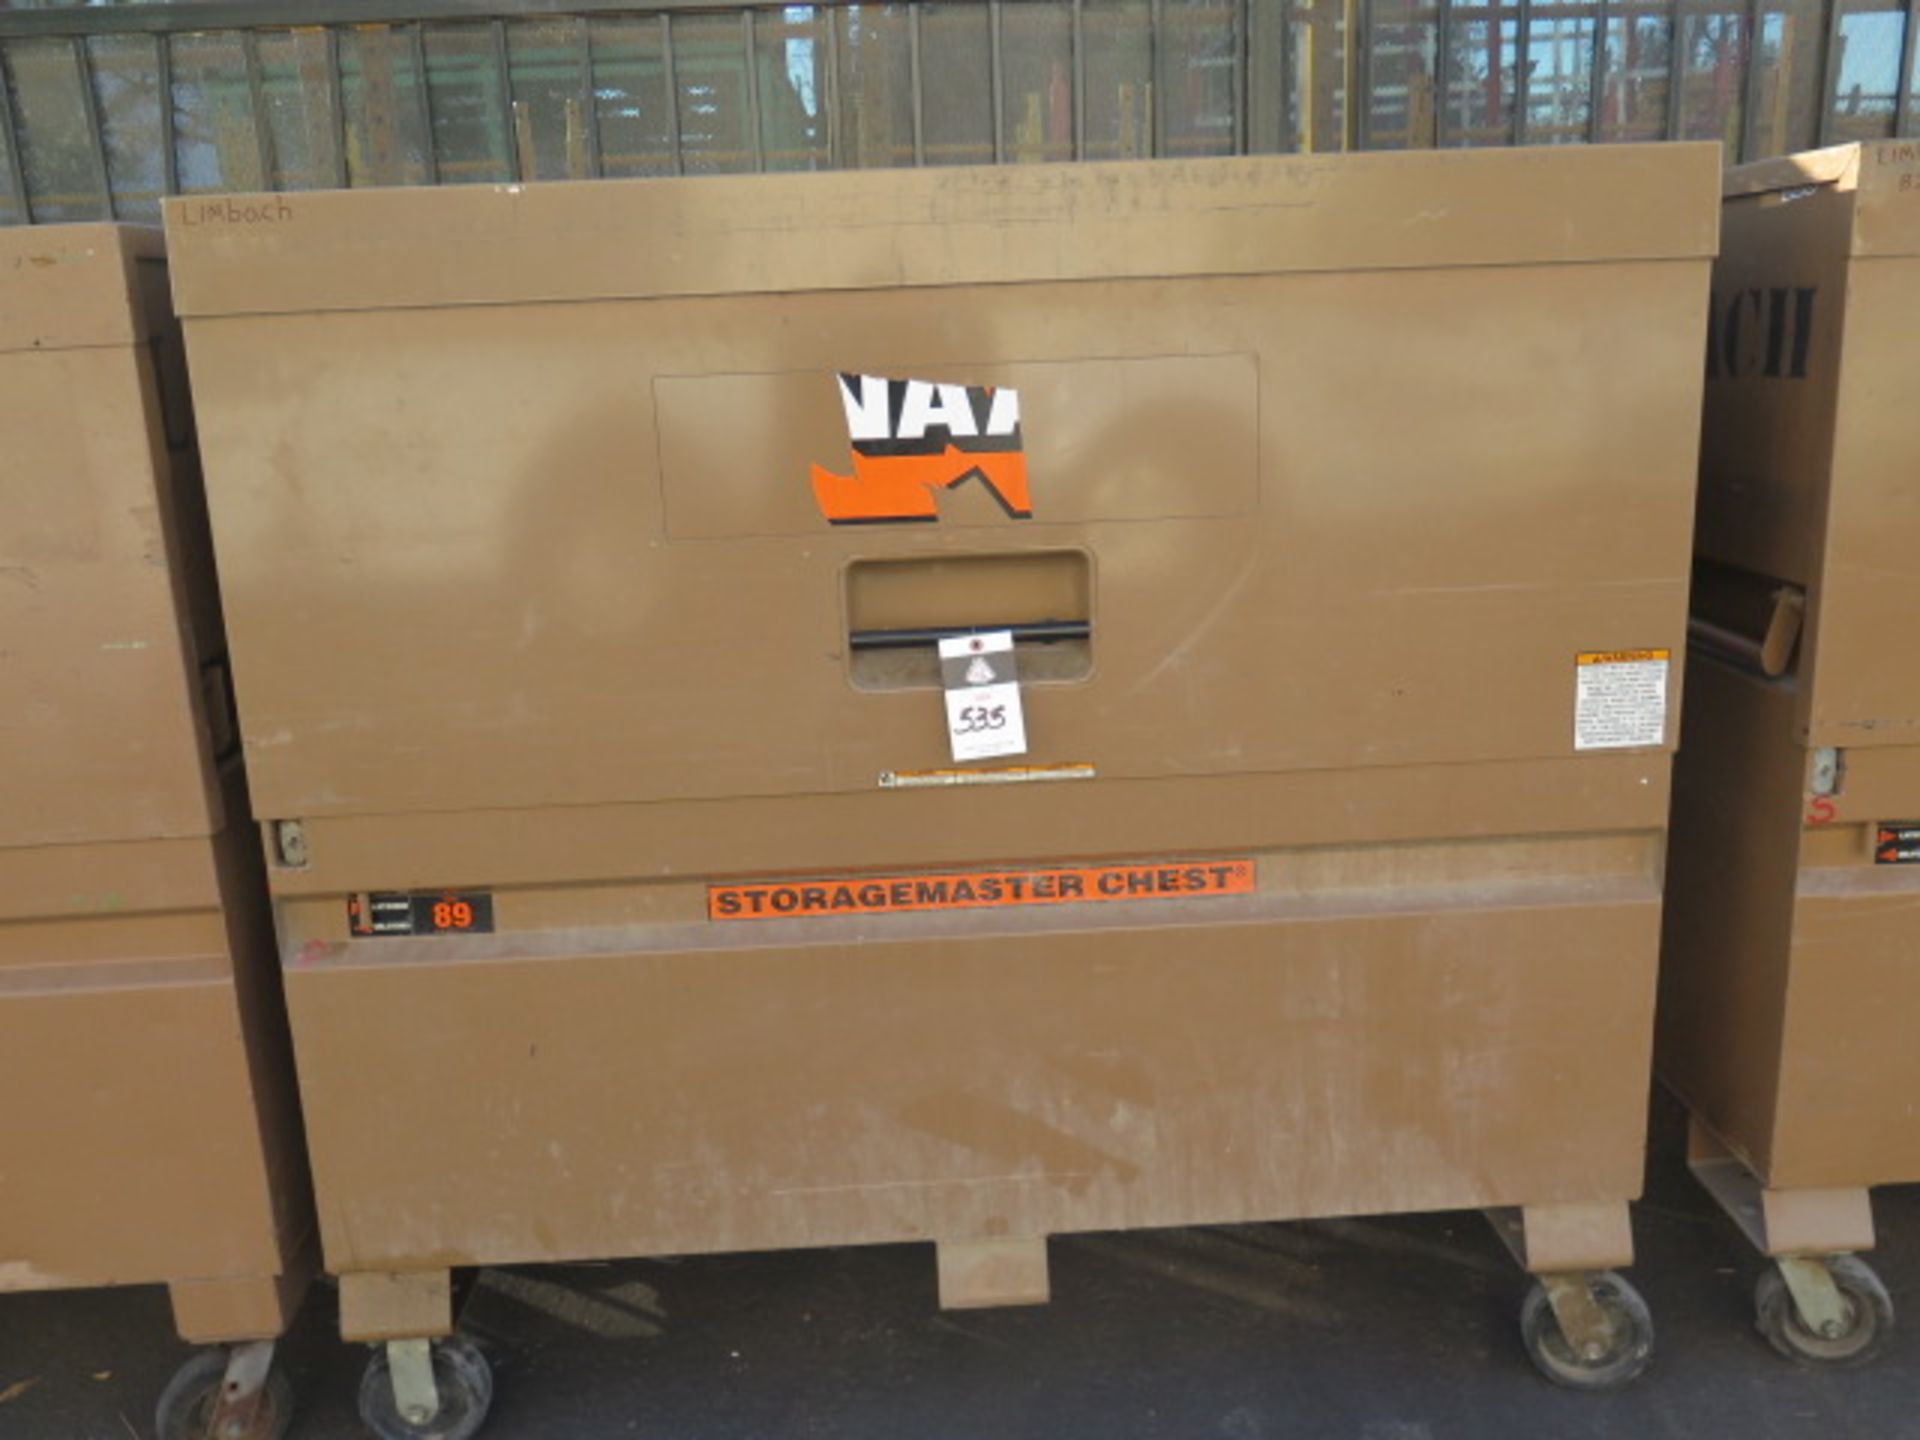 Knaack mdl. 89 "Storage Master" Rolling Job Box (SOLD AS-IS - NO WARRANTY)